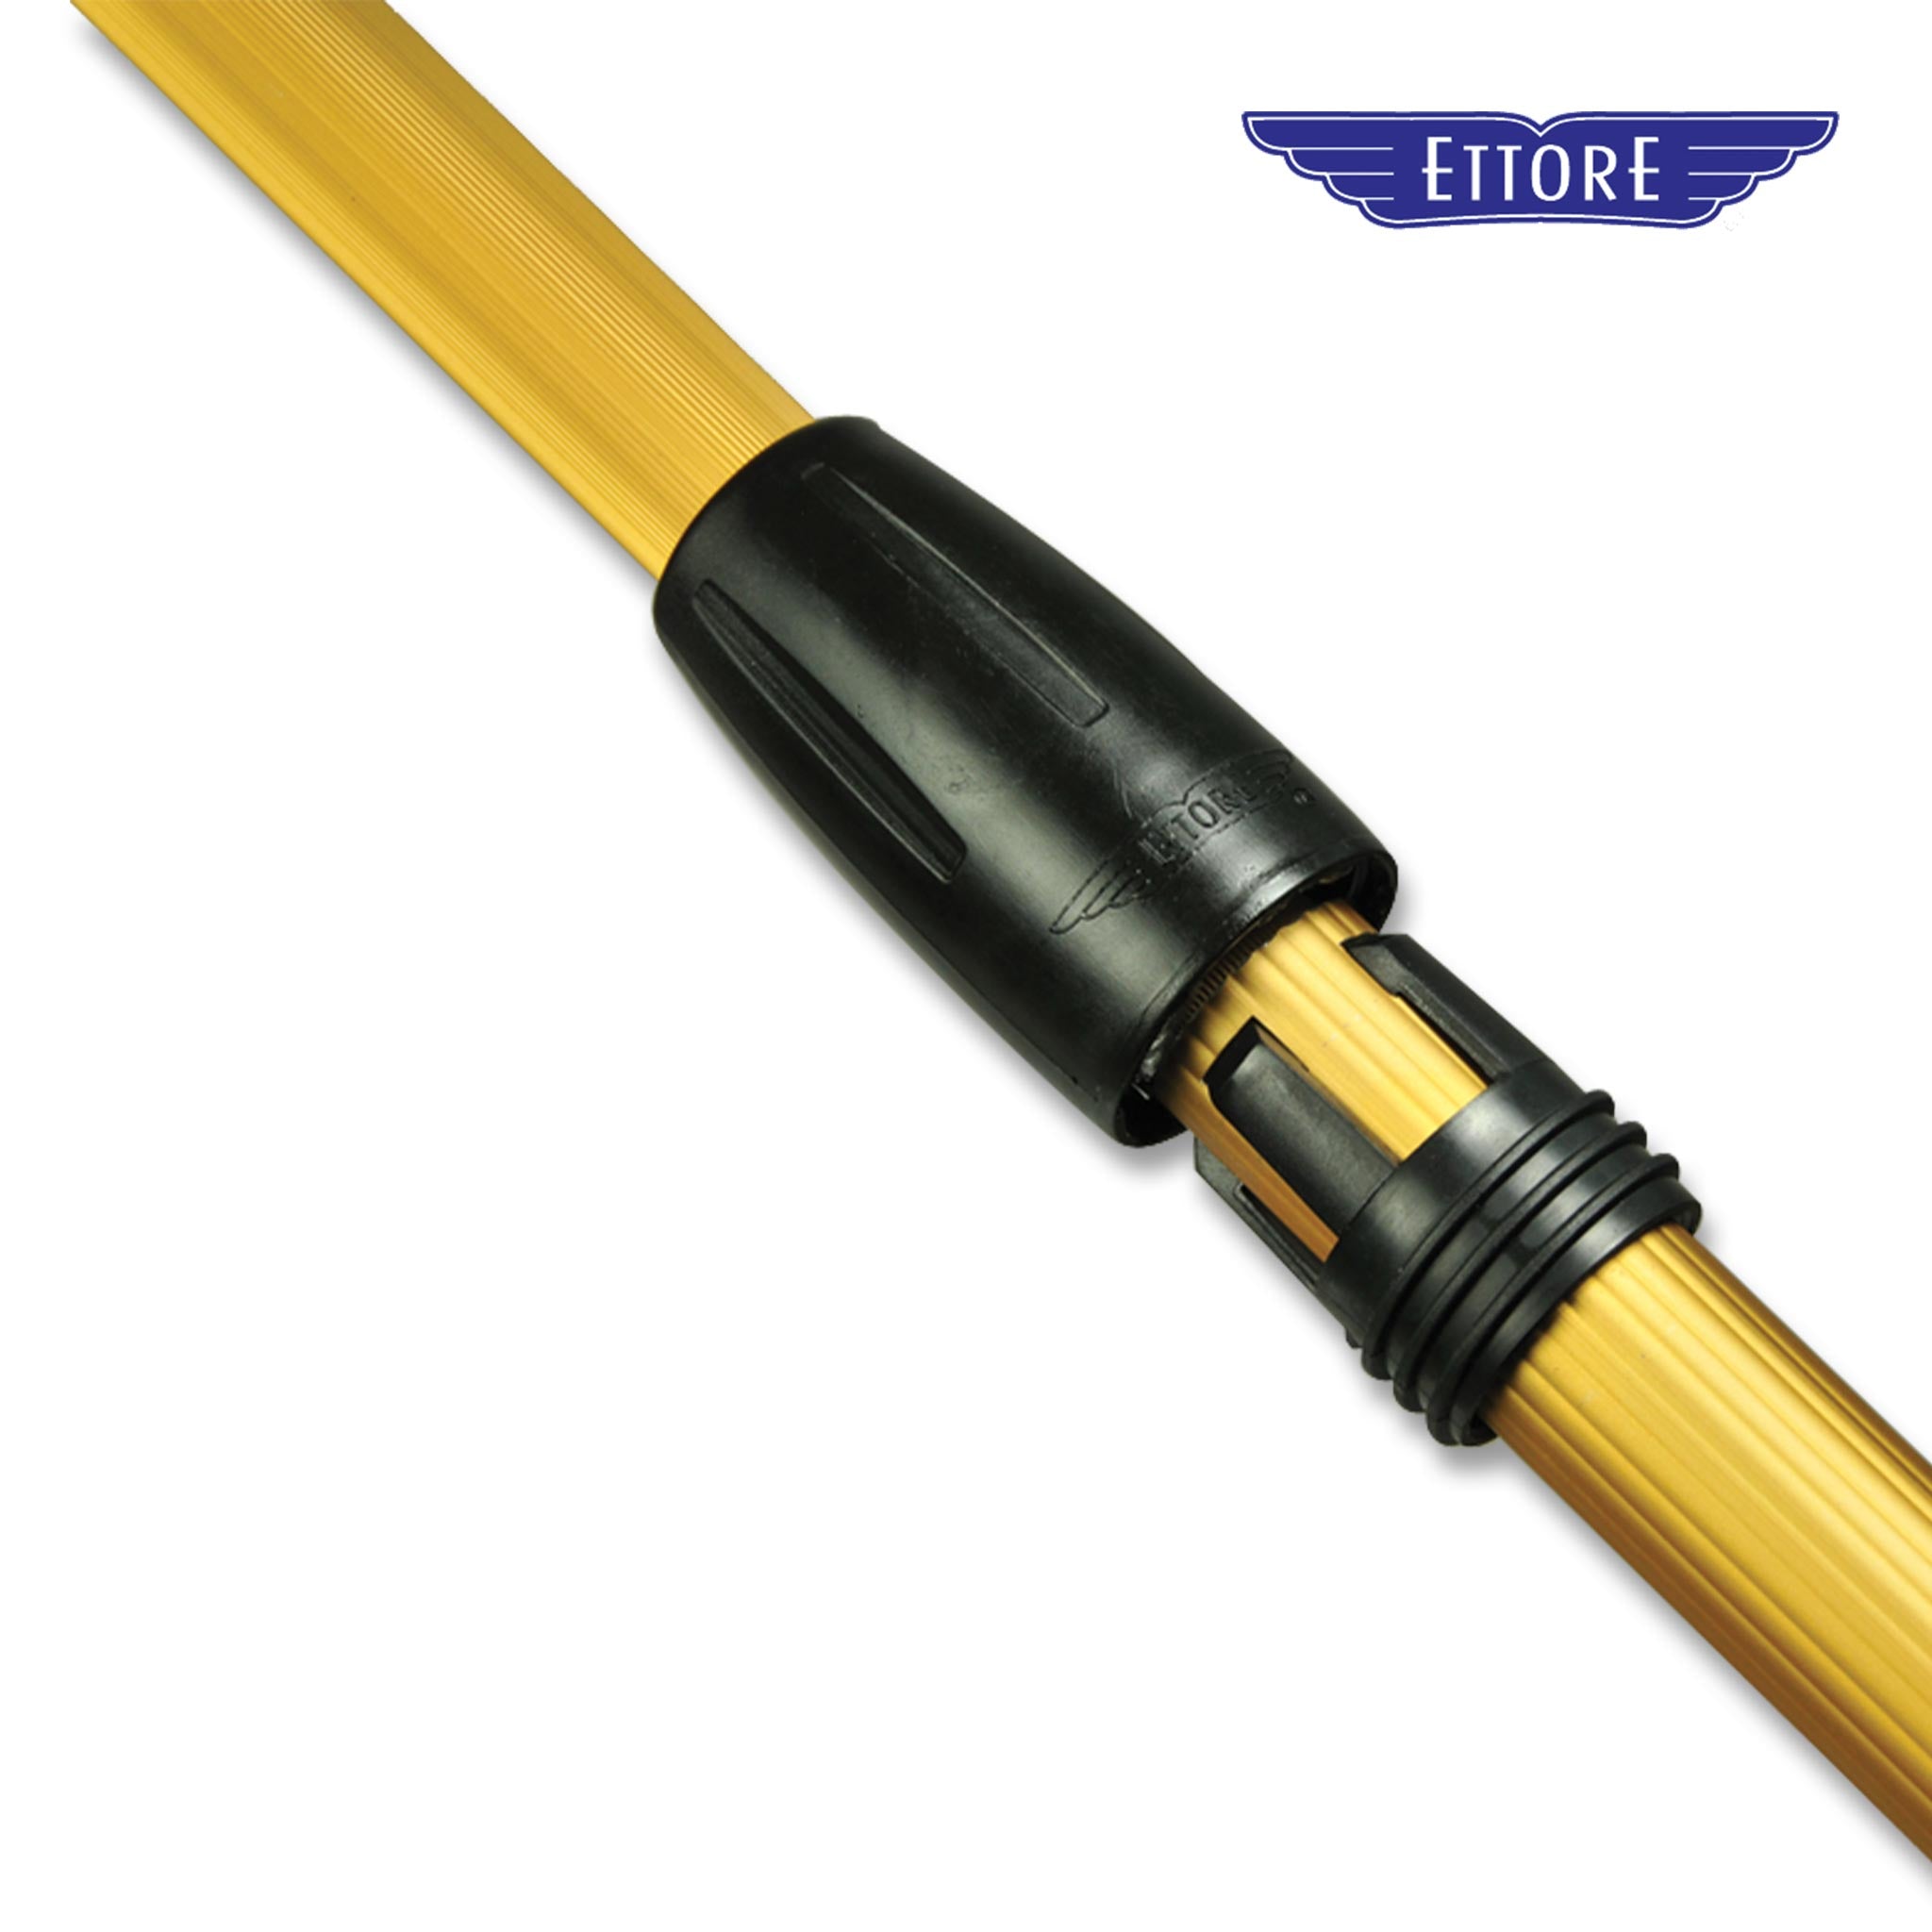 Ettore Pro Series Extension Pole